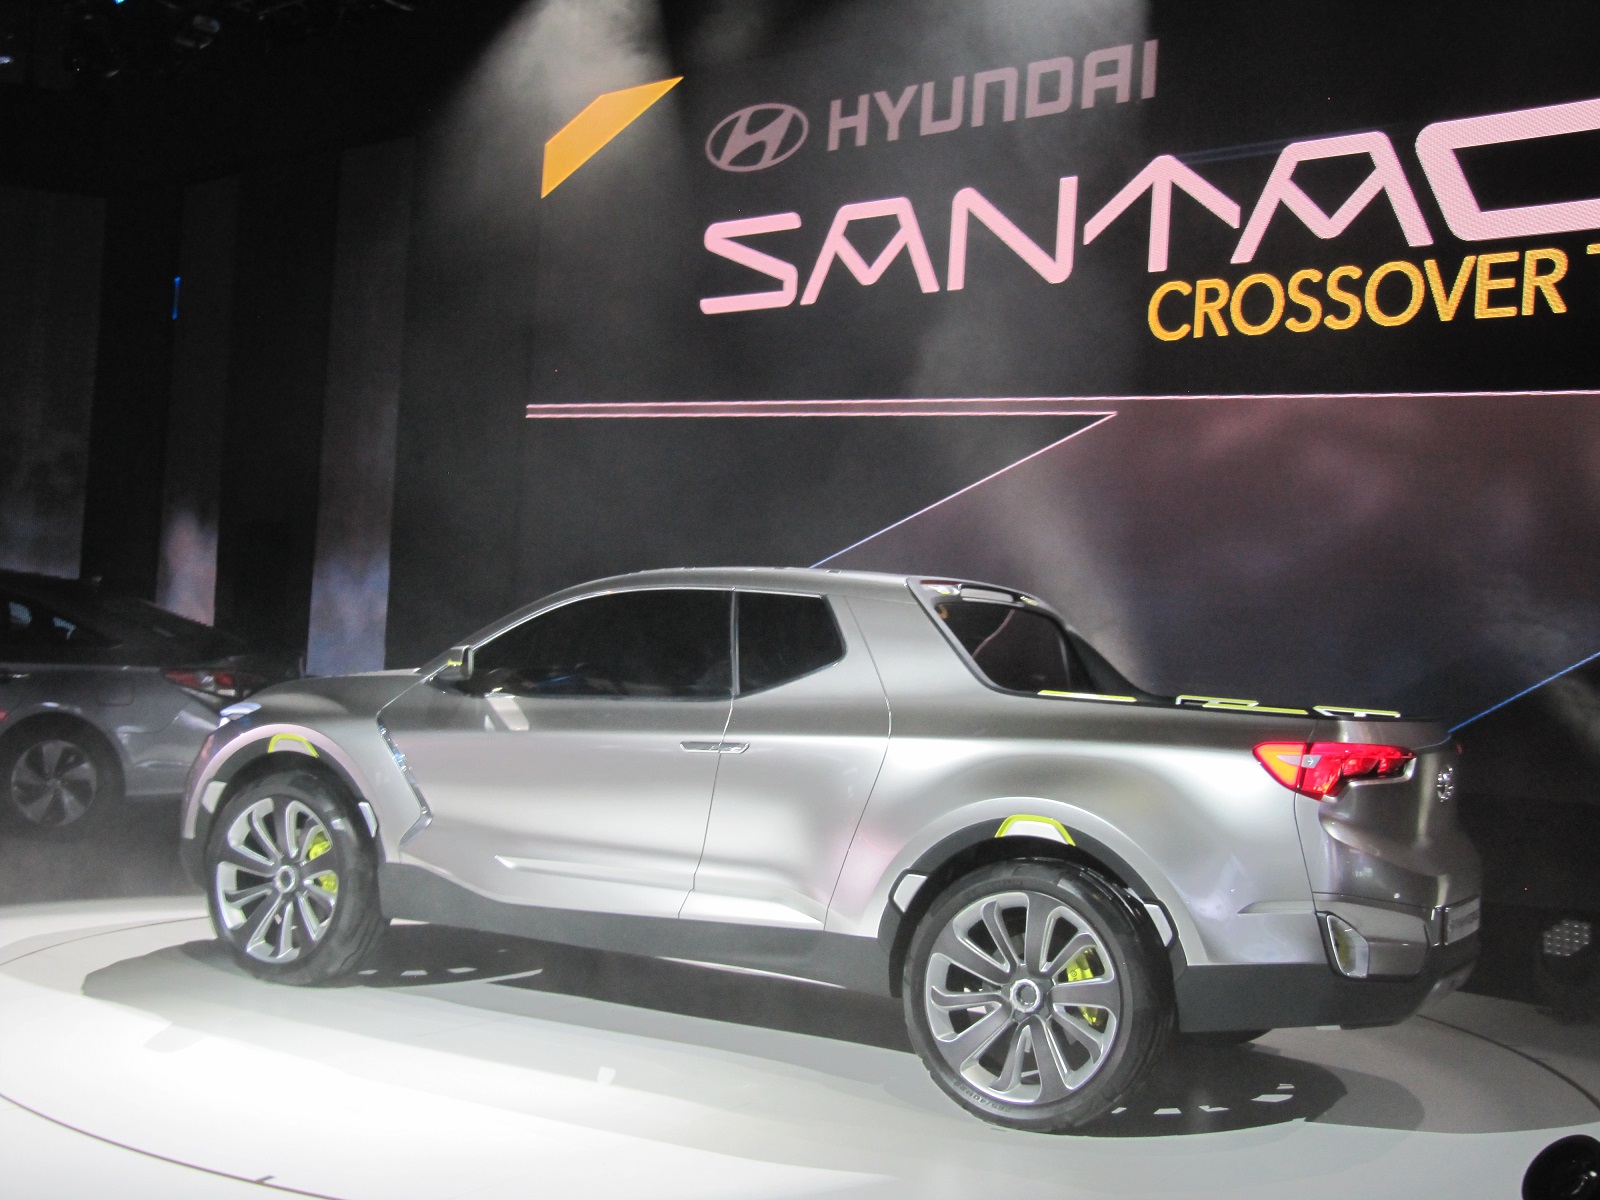  Hyundai  turning to trucks  to pick up  sluggish U S sales